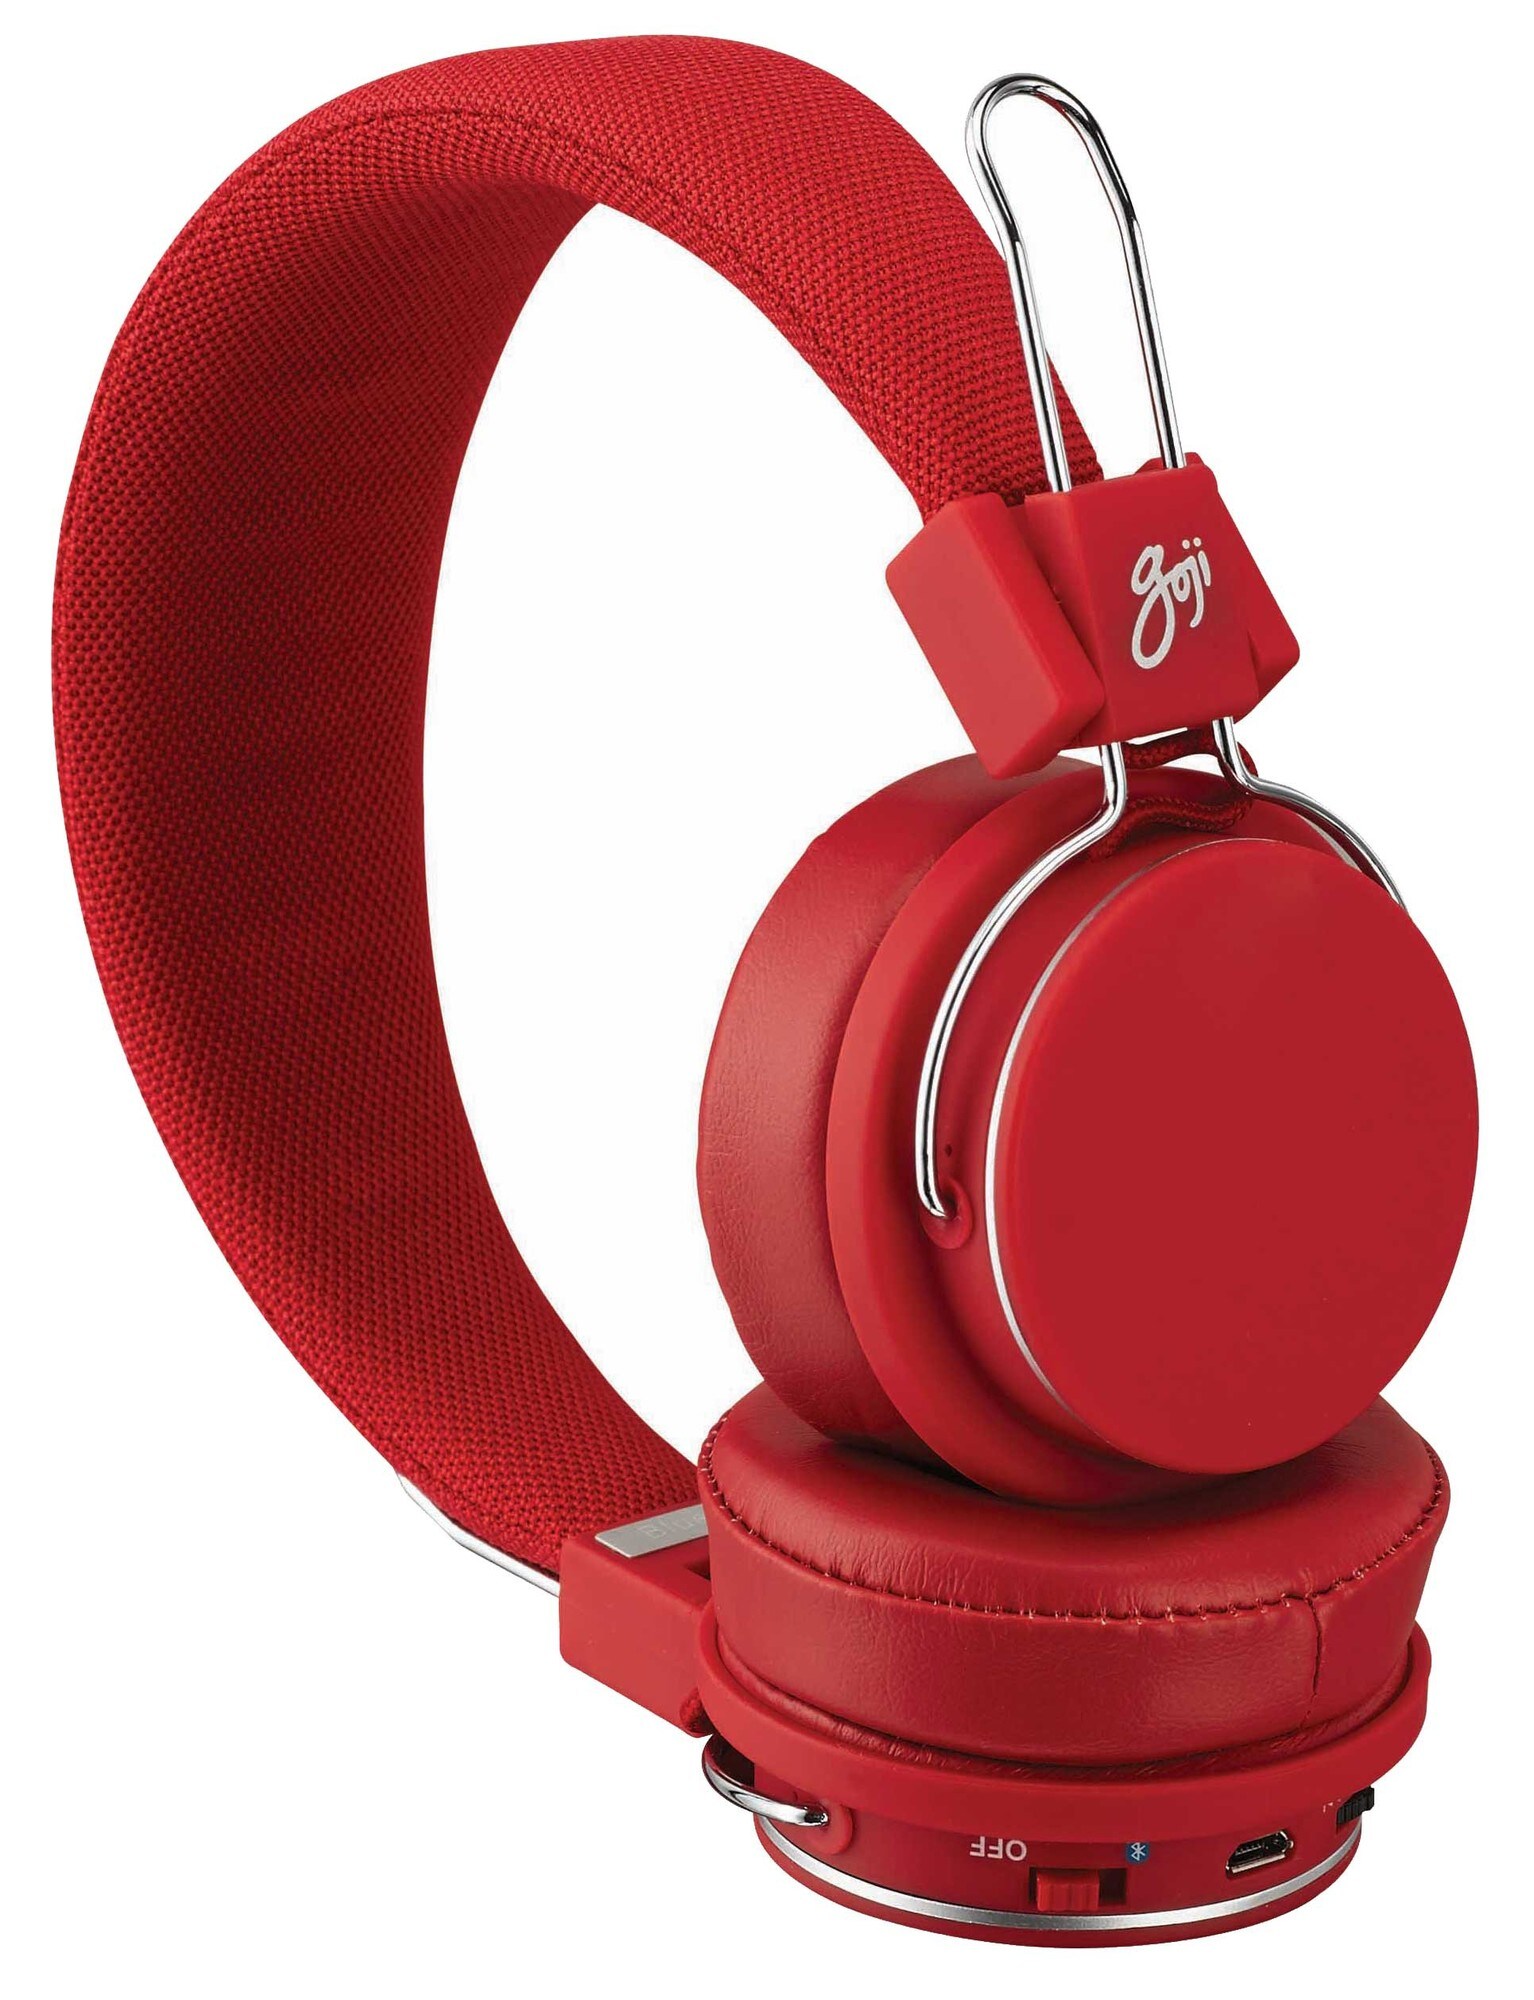 Goji on-ear hovedtelefoner - rød - Hovedtelefoner - Elgiganten